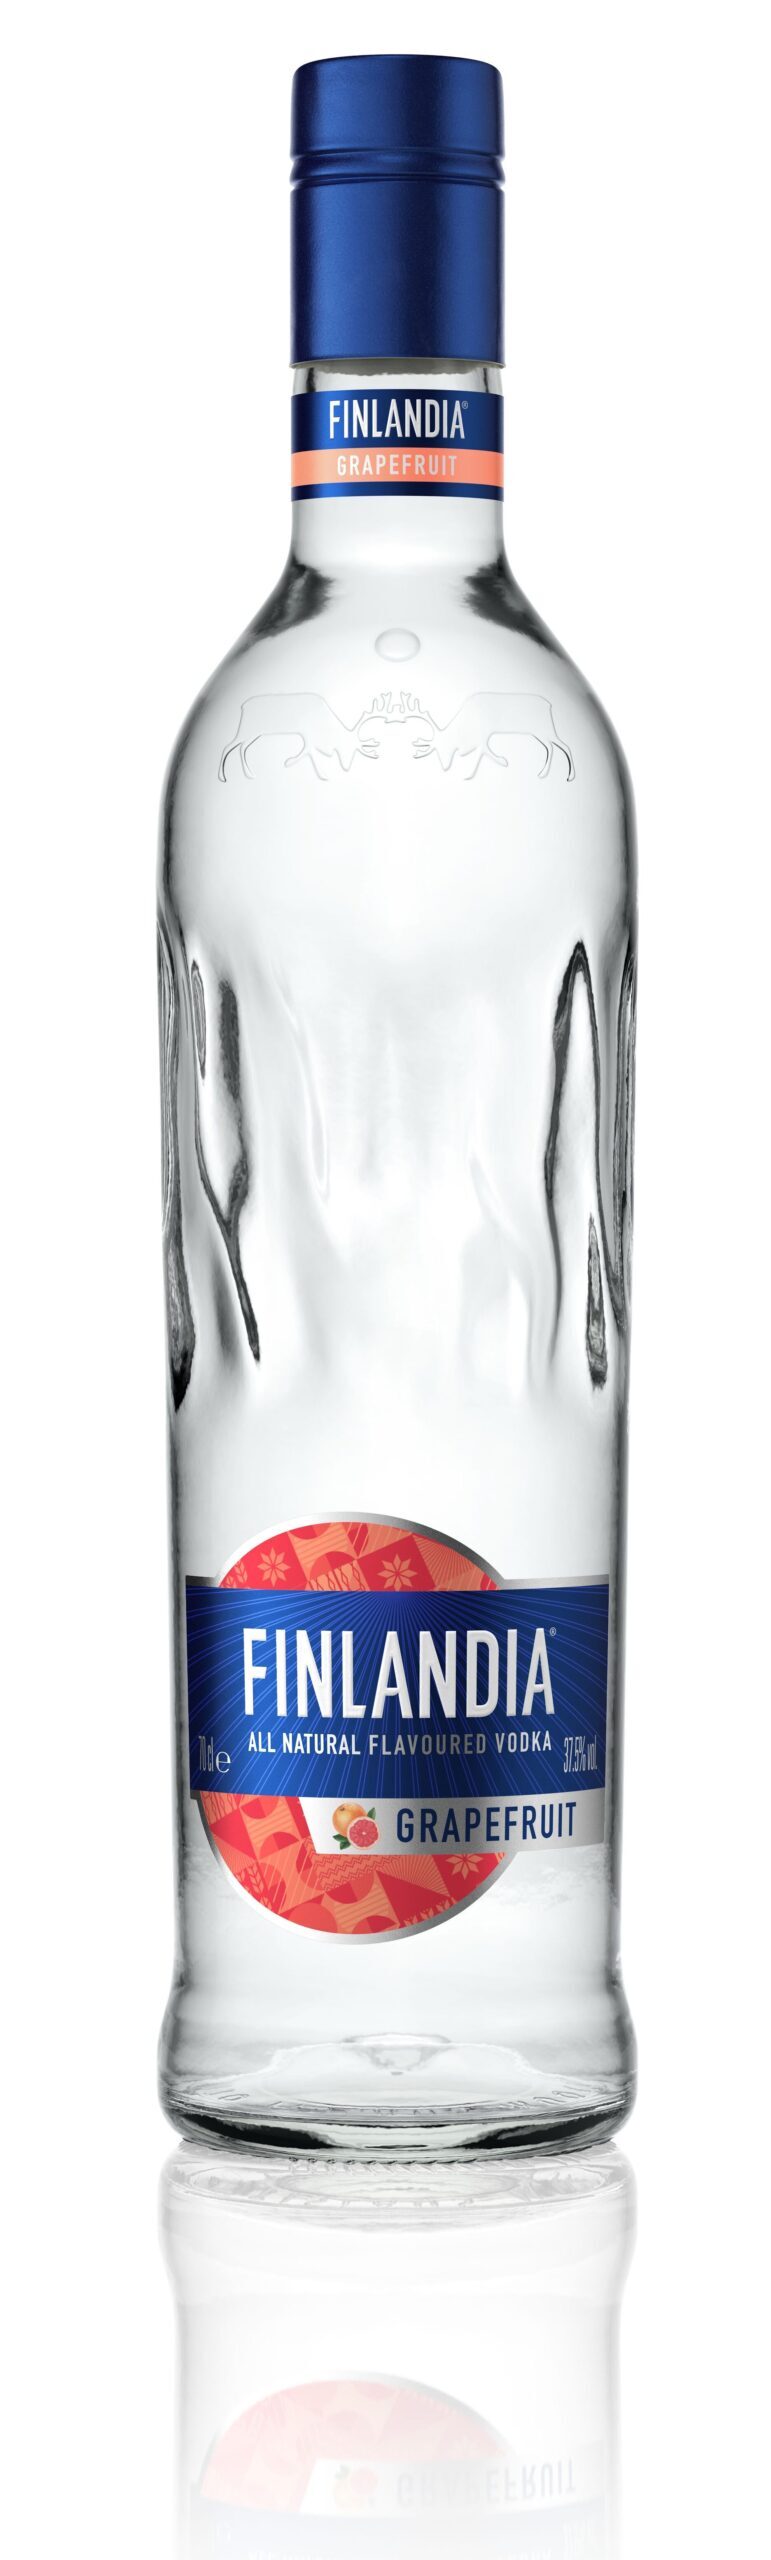 aw-finlandia-grapefruit-bottle